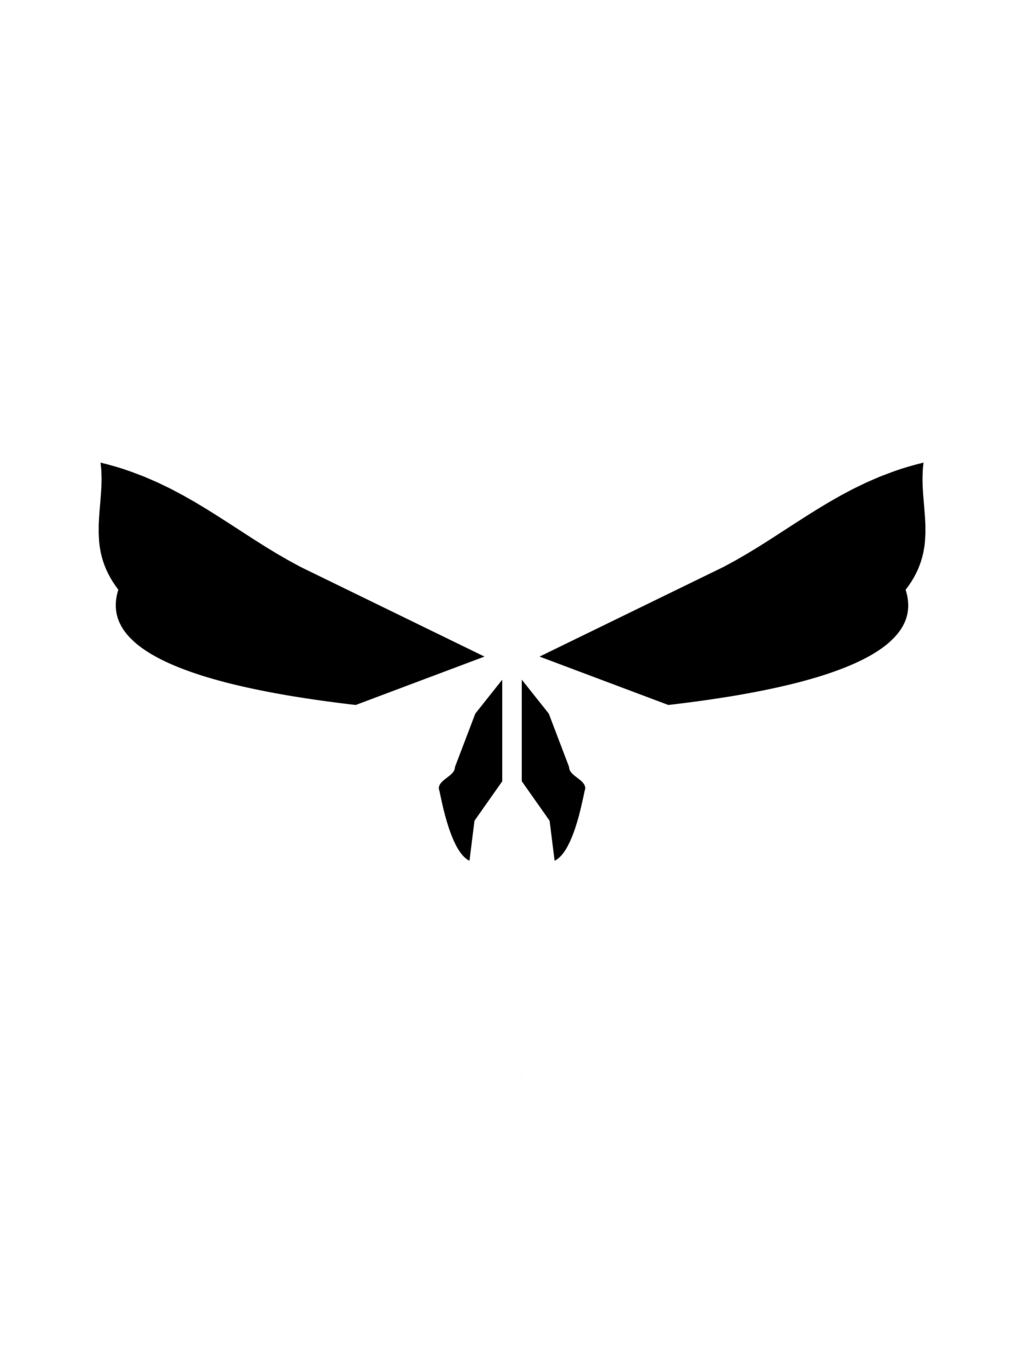 Punisher Skull 1 by JMK Prime on